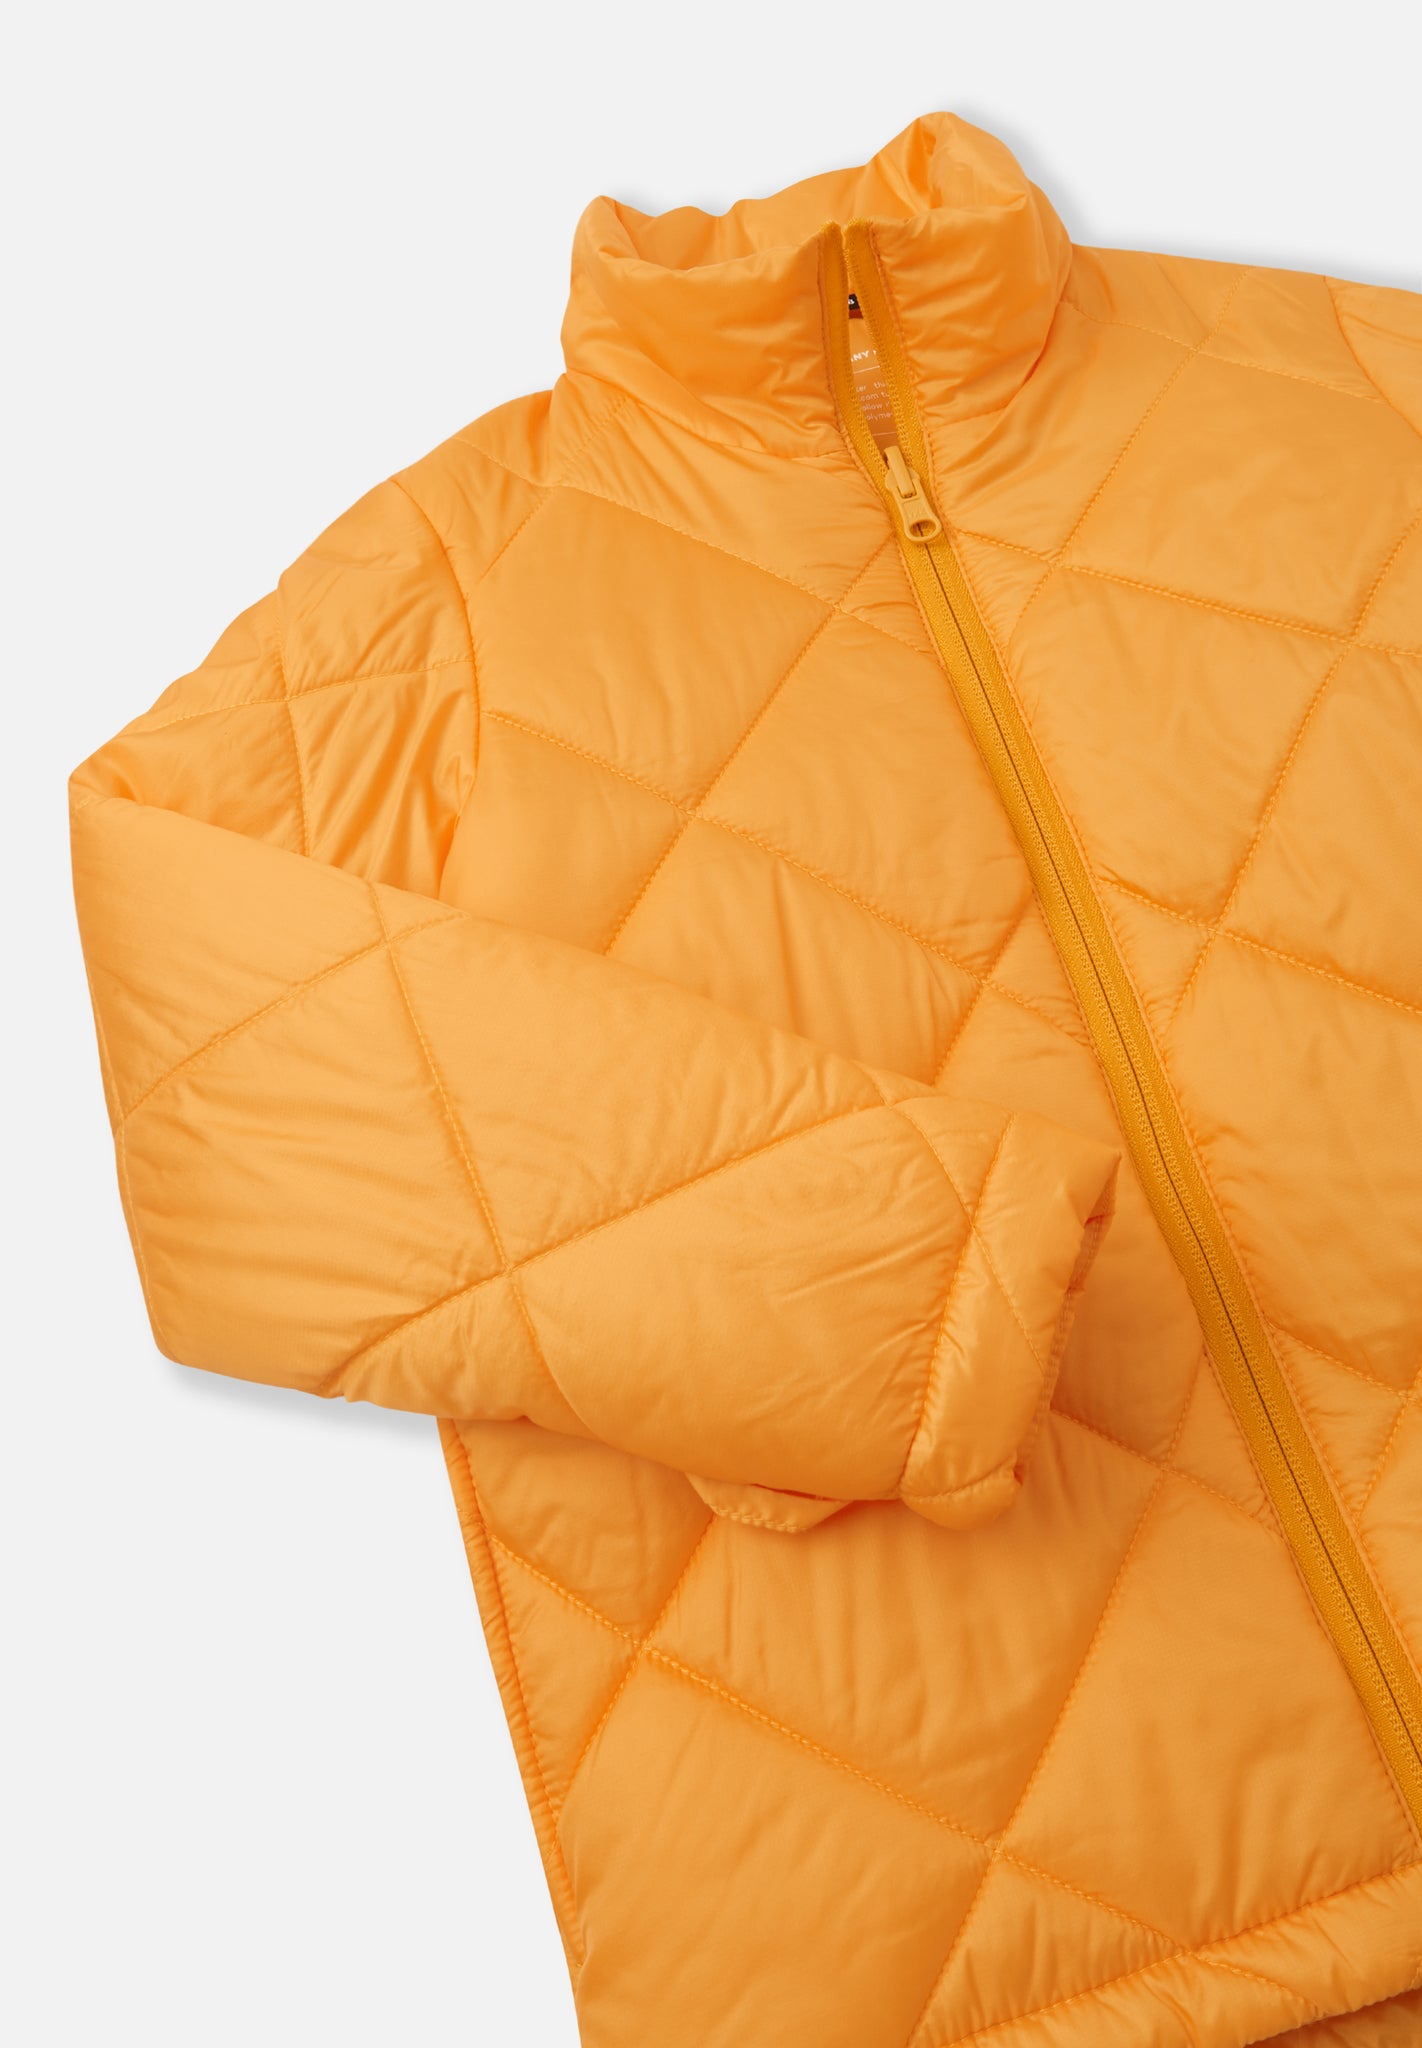 The <tc>Reima</tc>  Sisin warming jacket